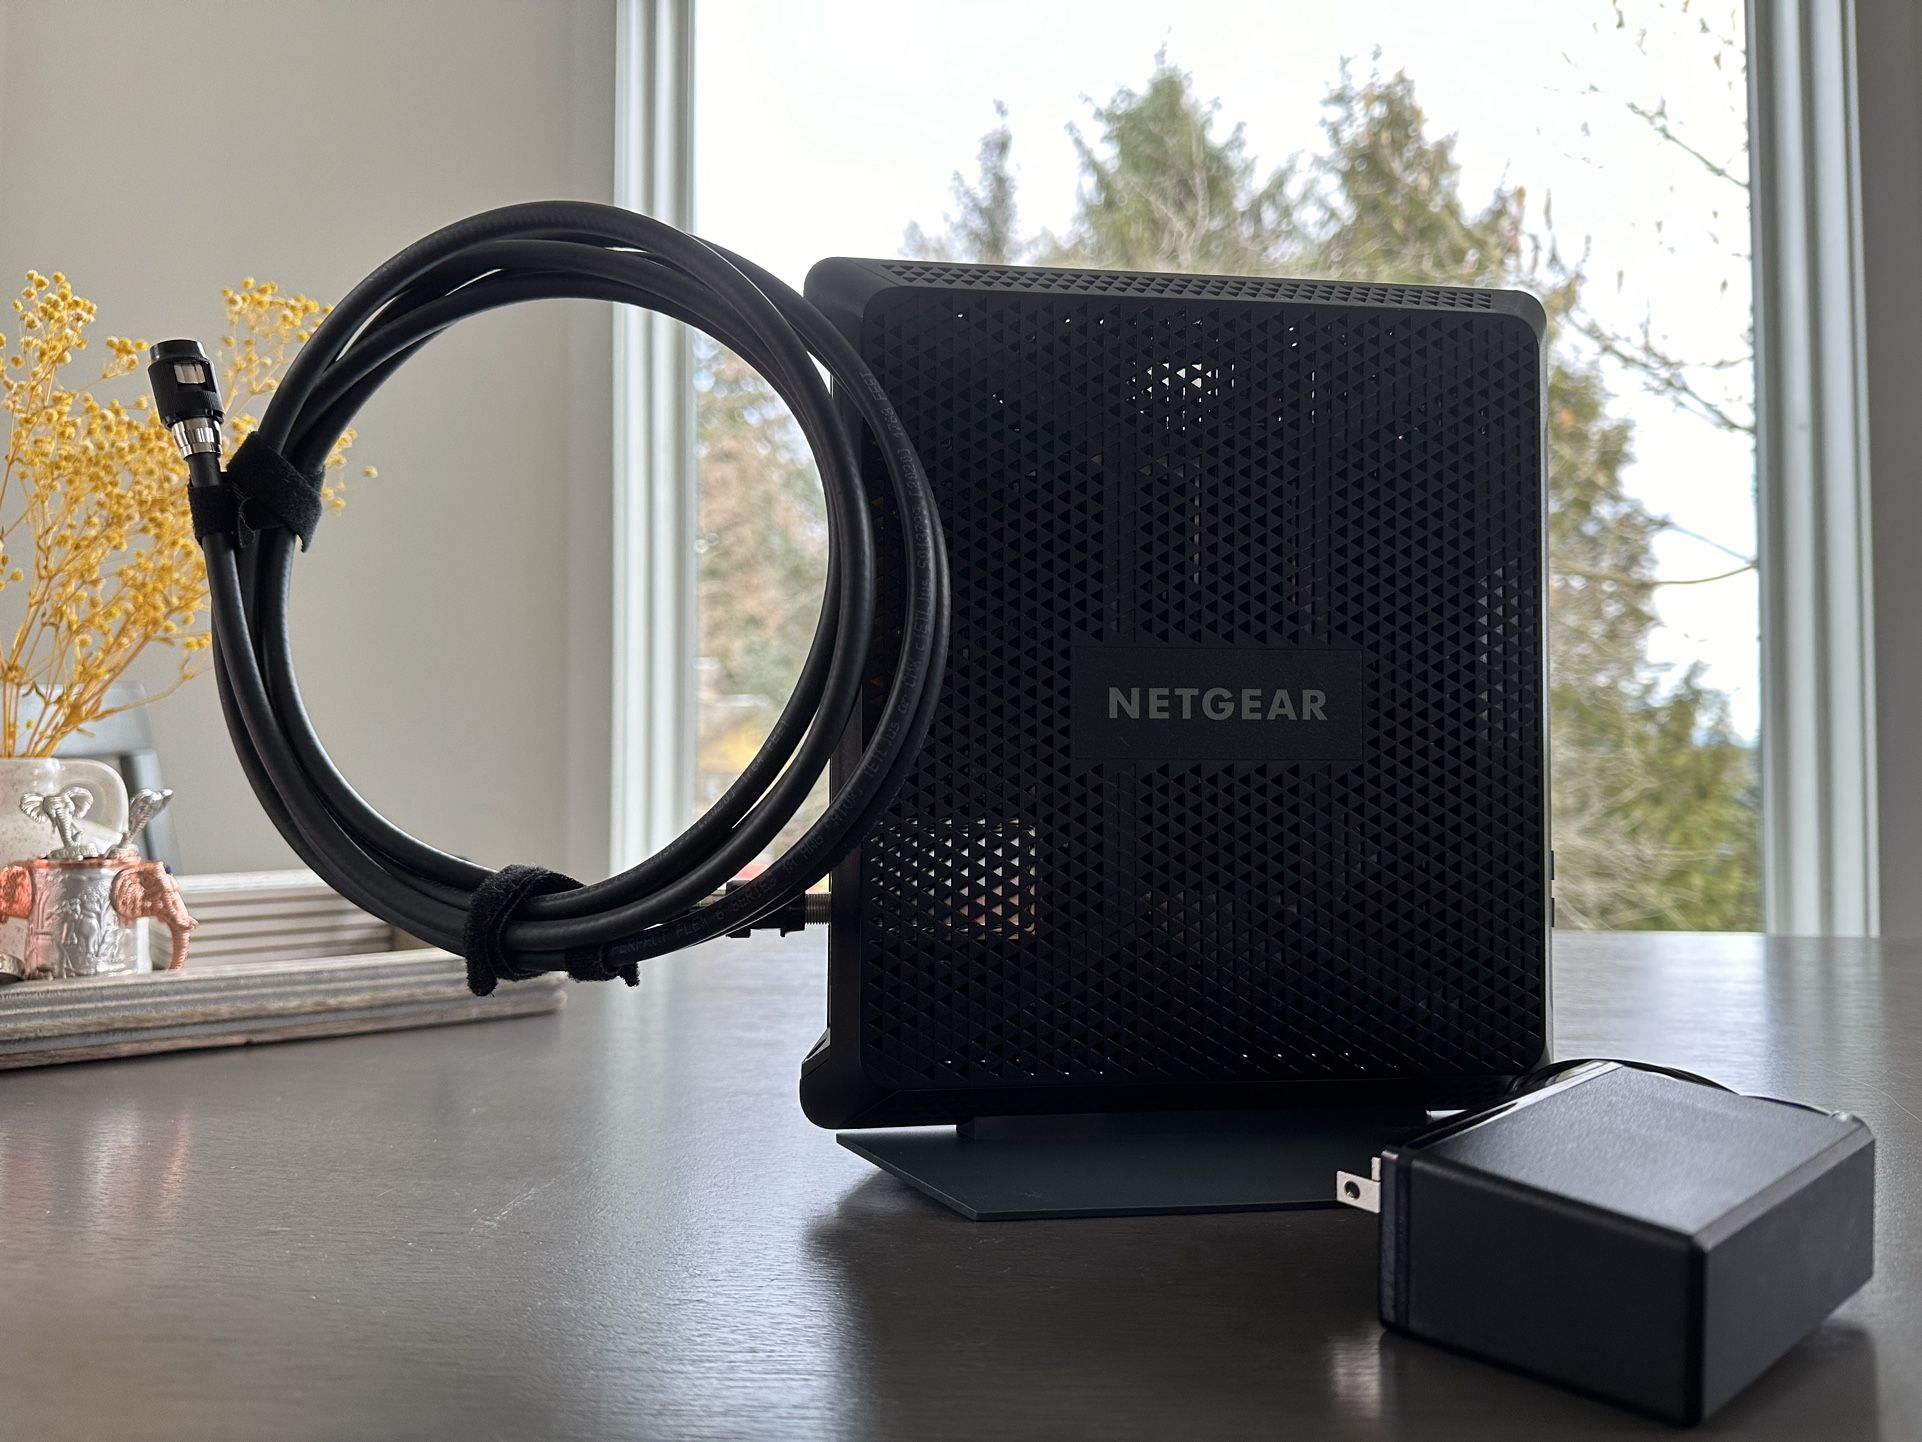 NETGEAR Nighthawk Modem WiFi Router